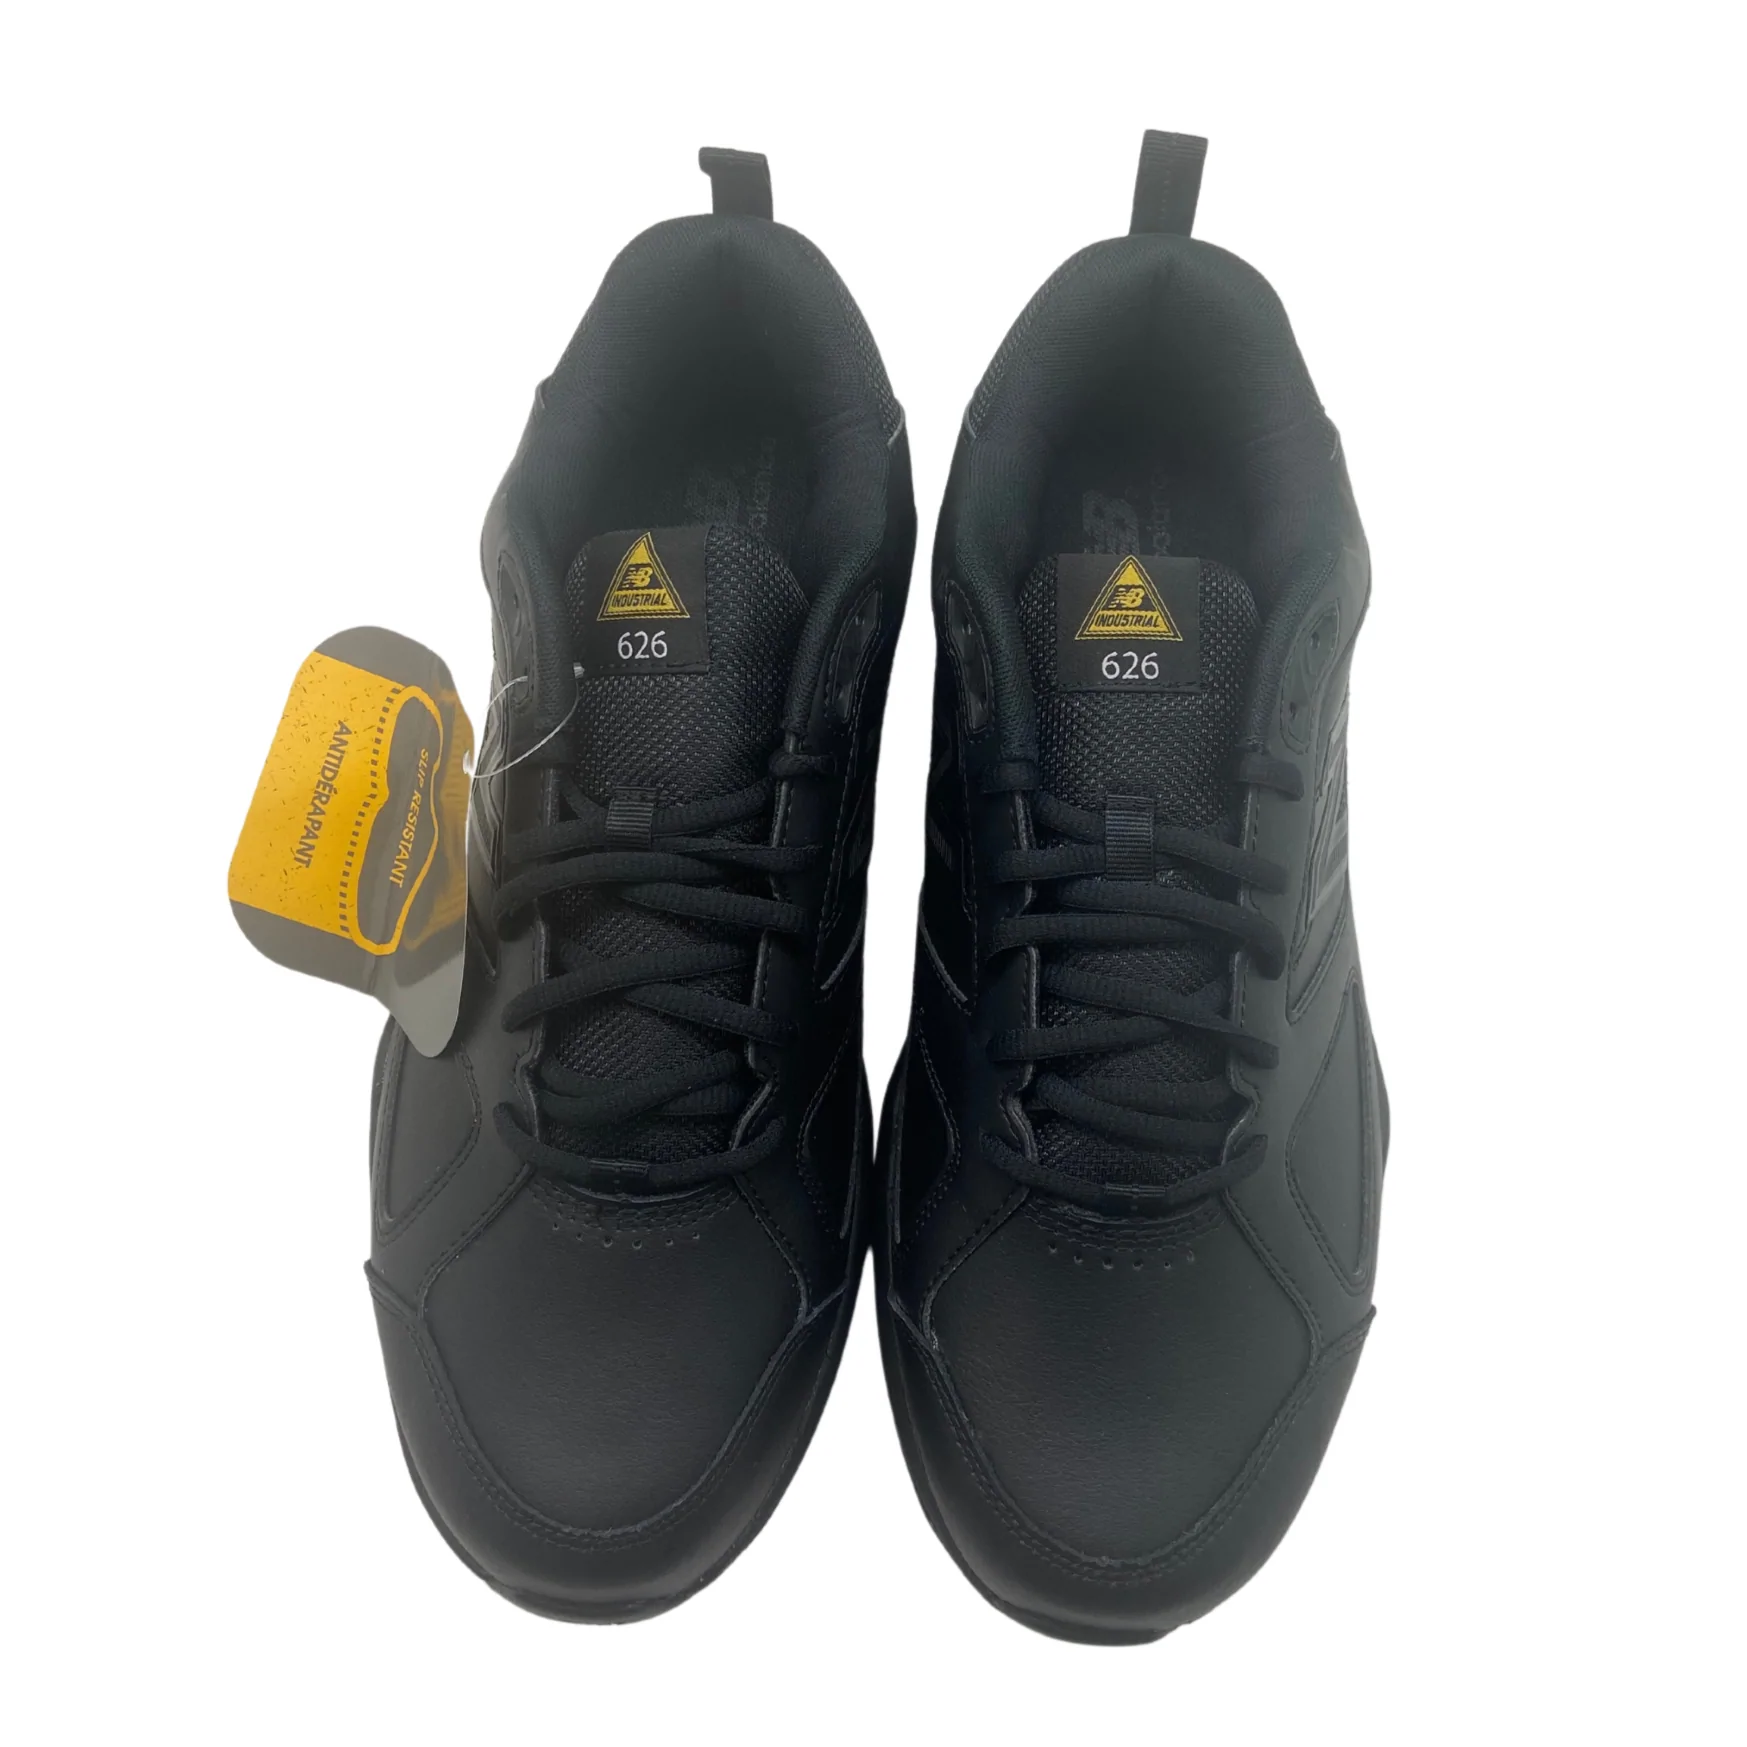 New Balance: Men's Shoes / Industrial / Black / Size 12.5